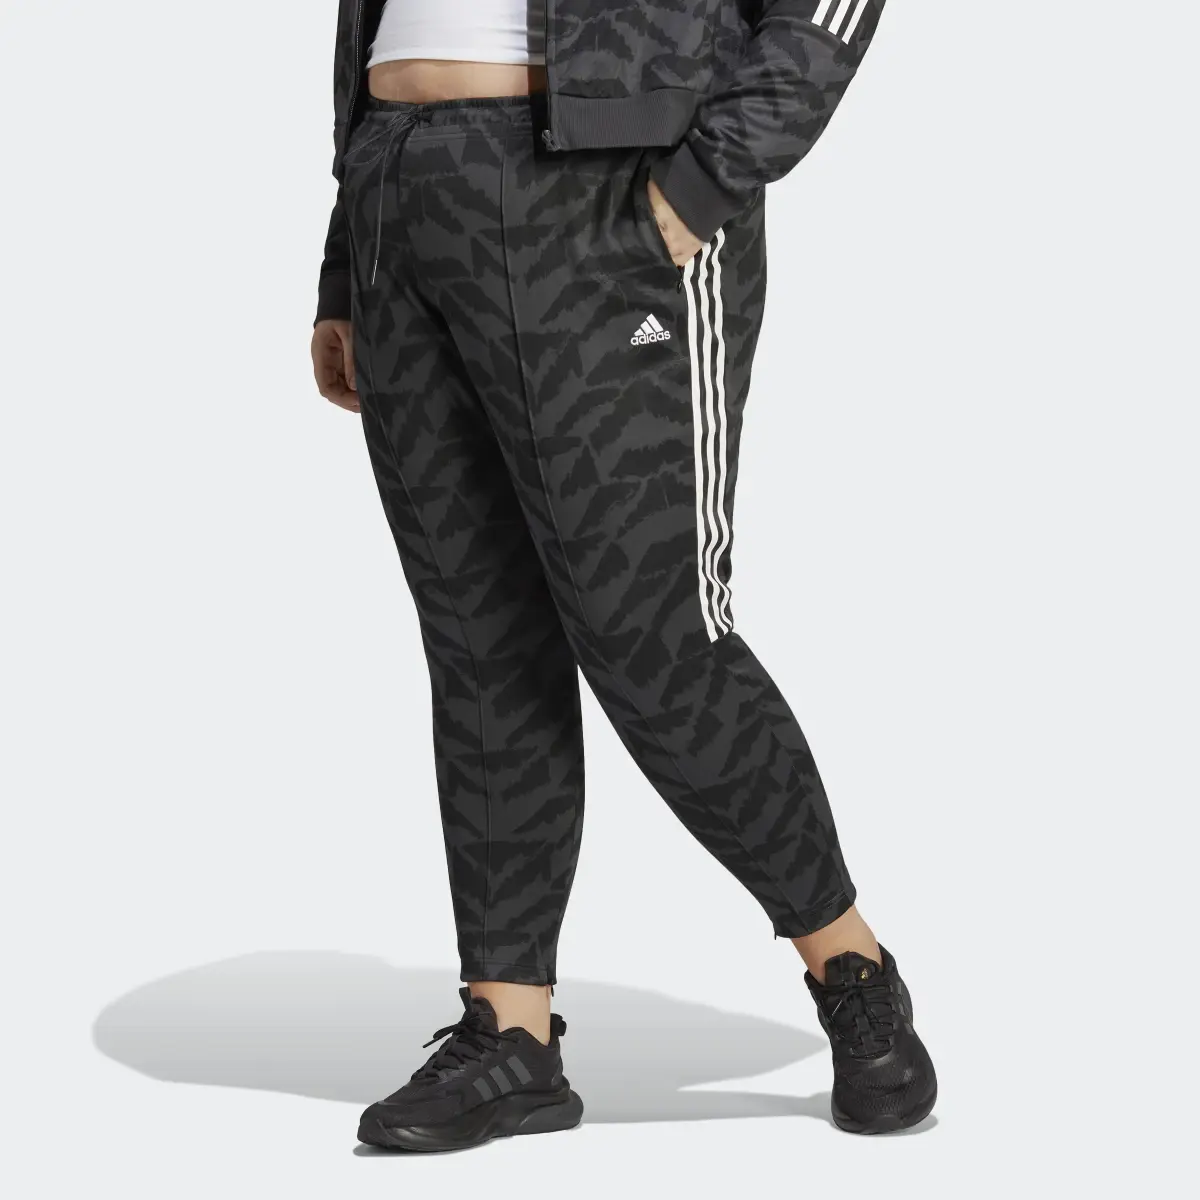 Adidas Track pants Tiro Suit Up Lifestyle (Curvy). 1